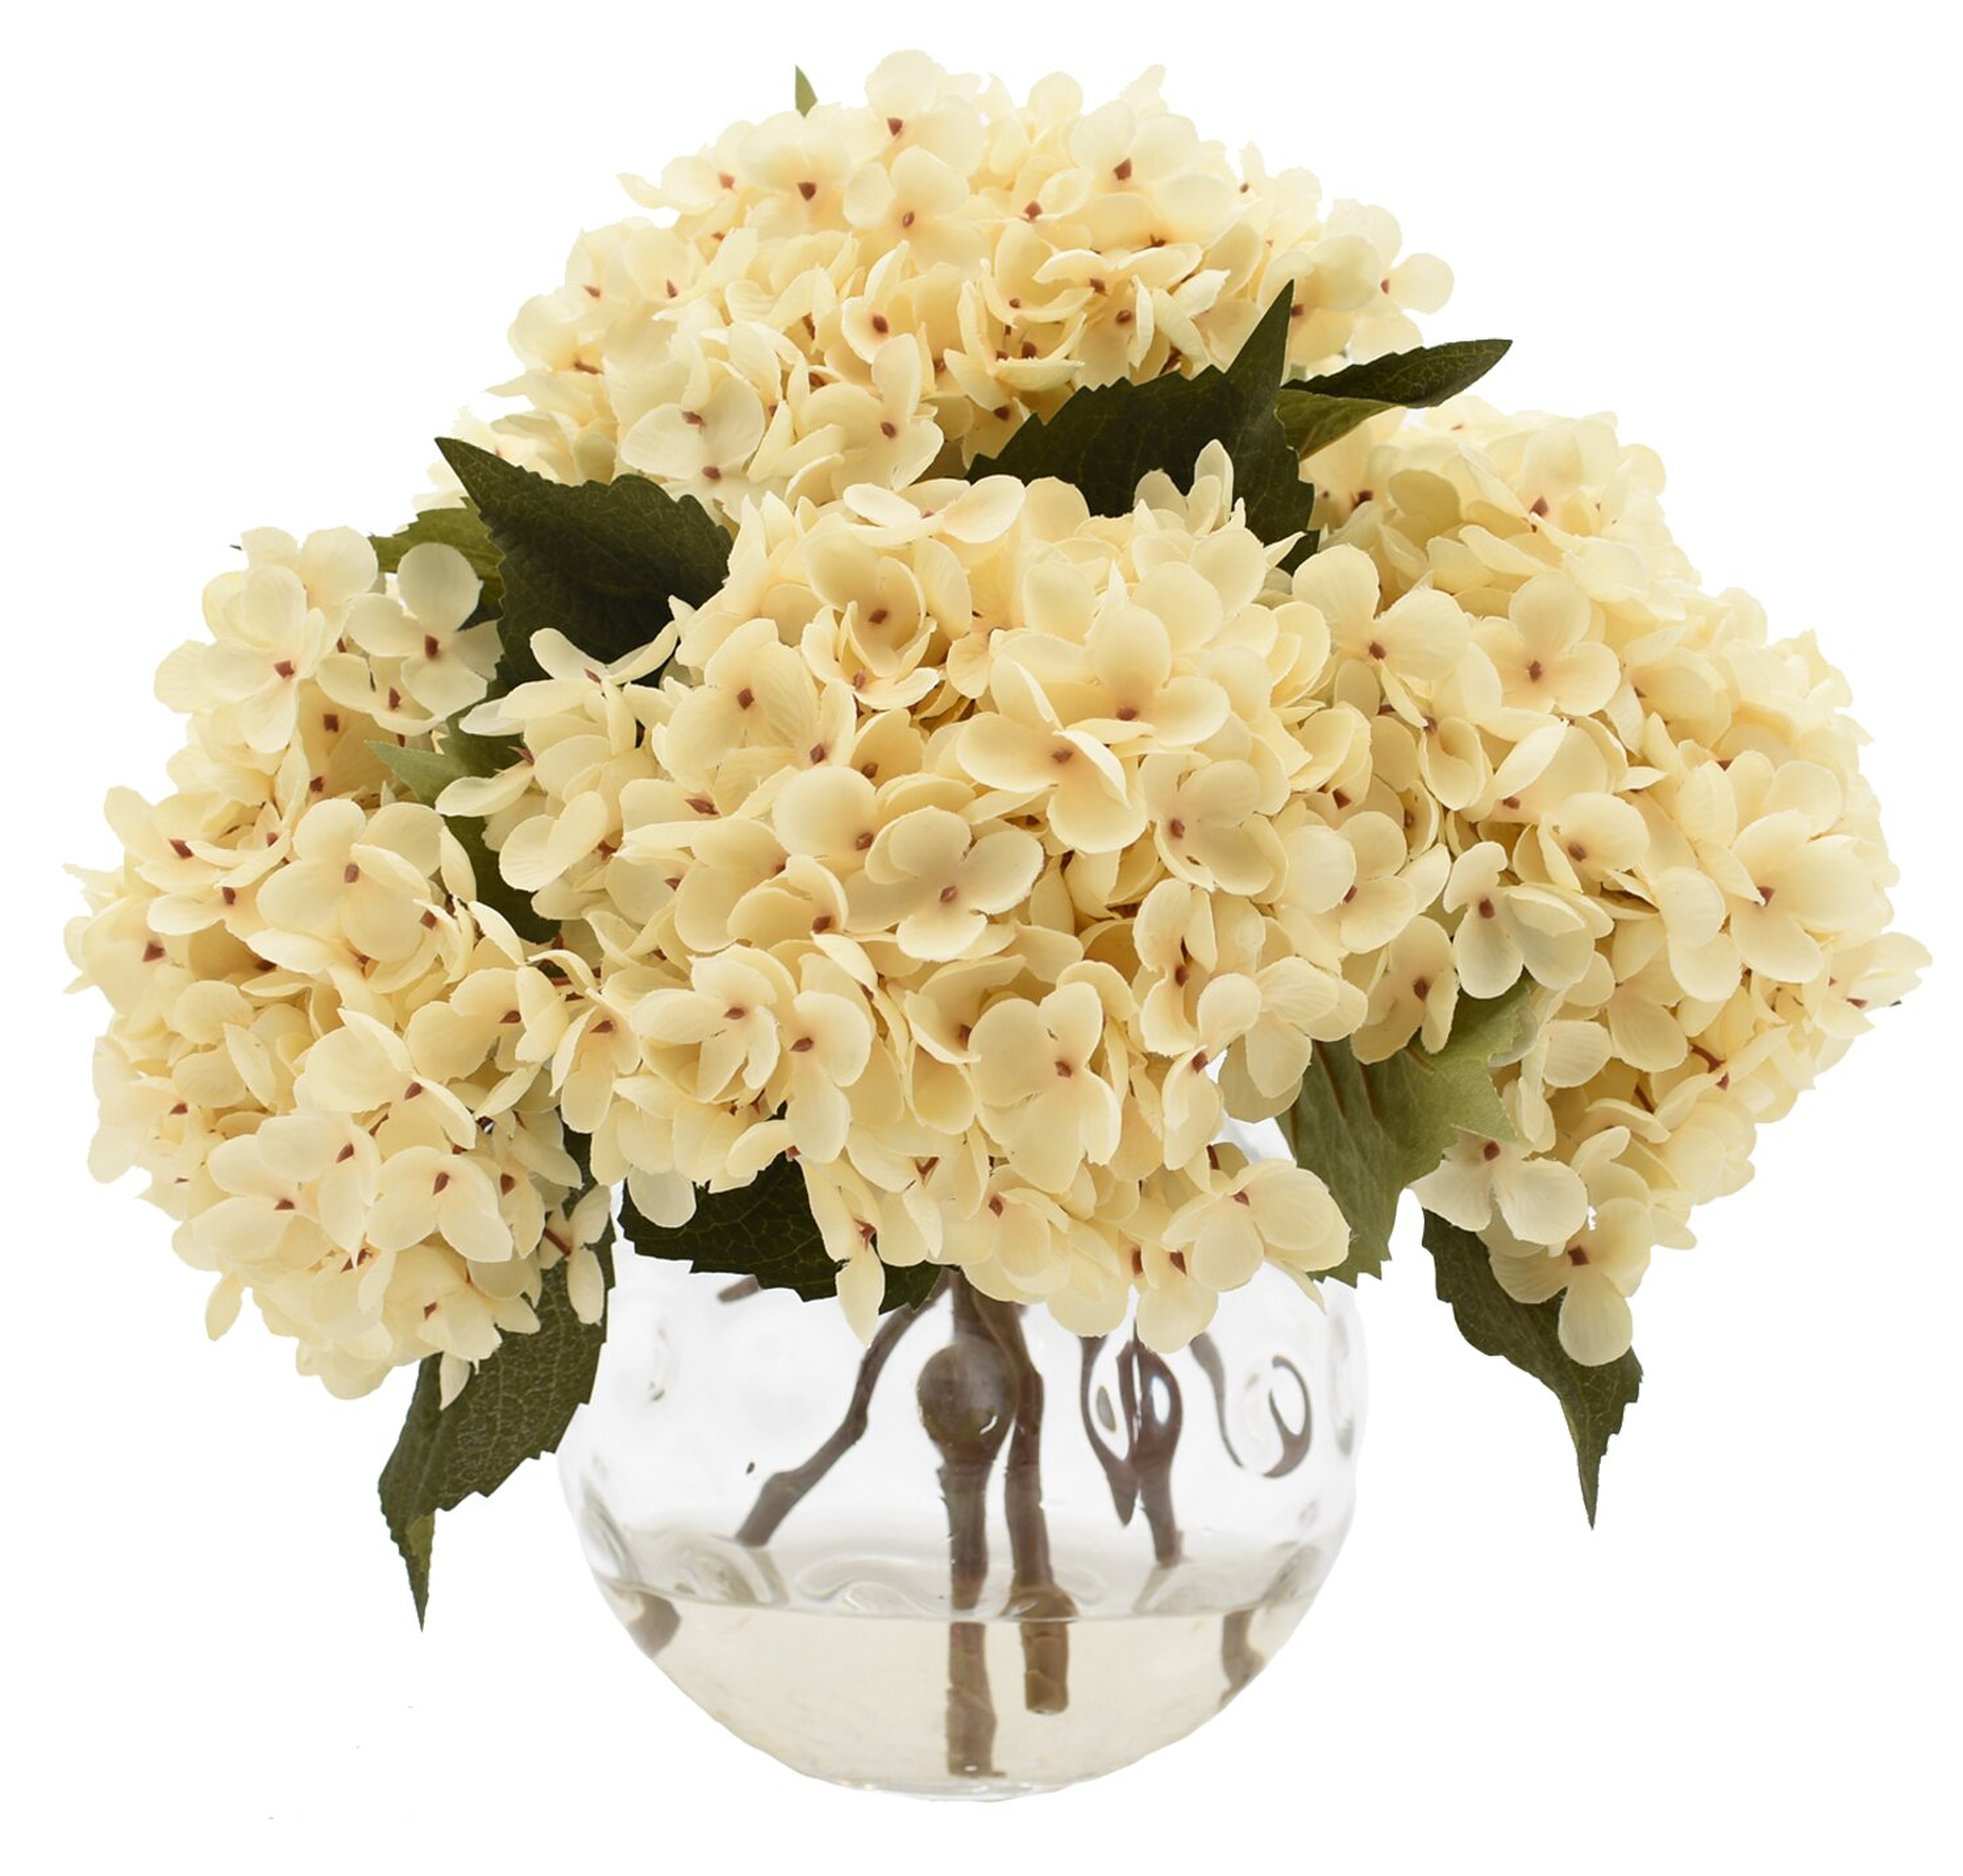 Hydrangea Floral Arrangement in Vase - Wayfair